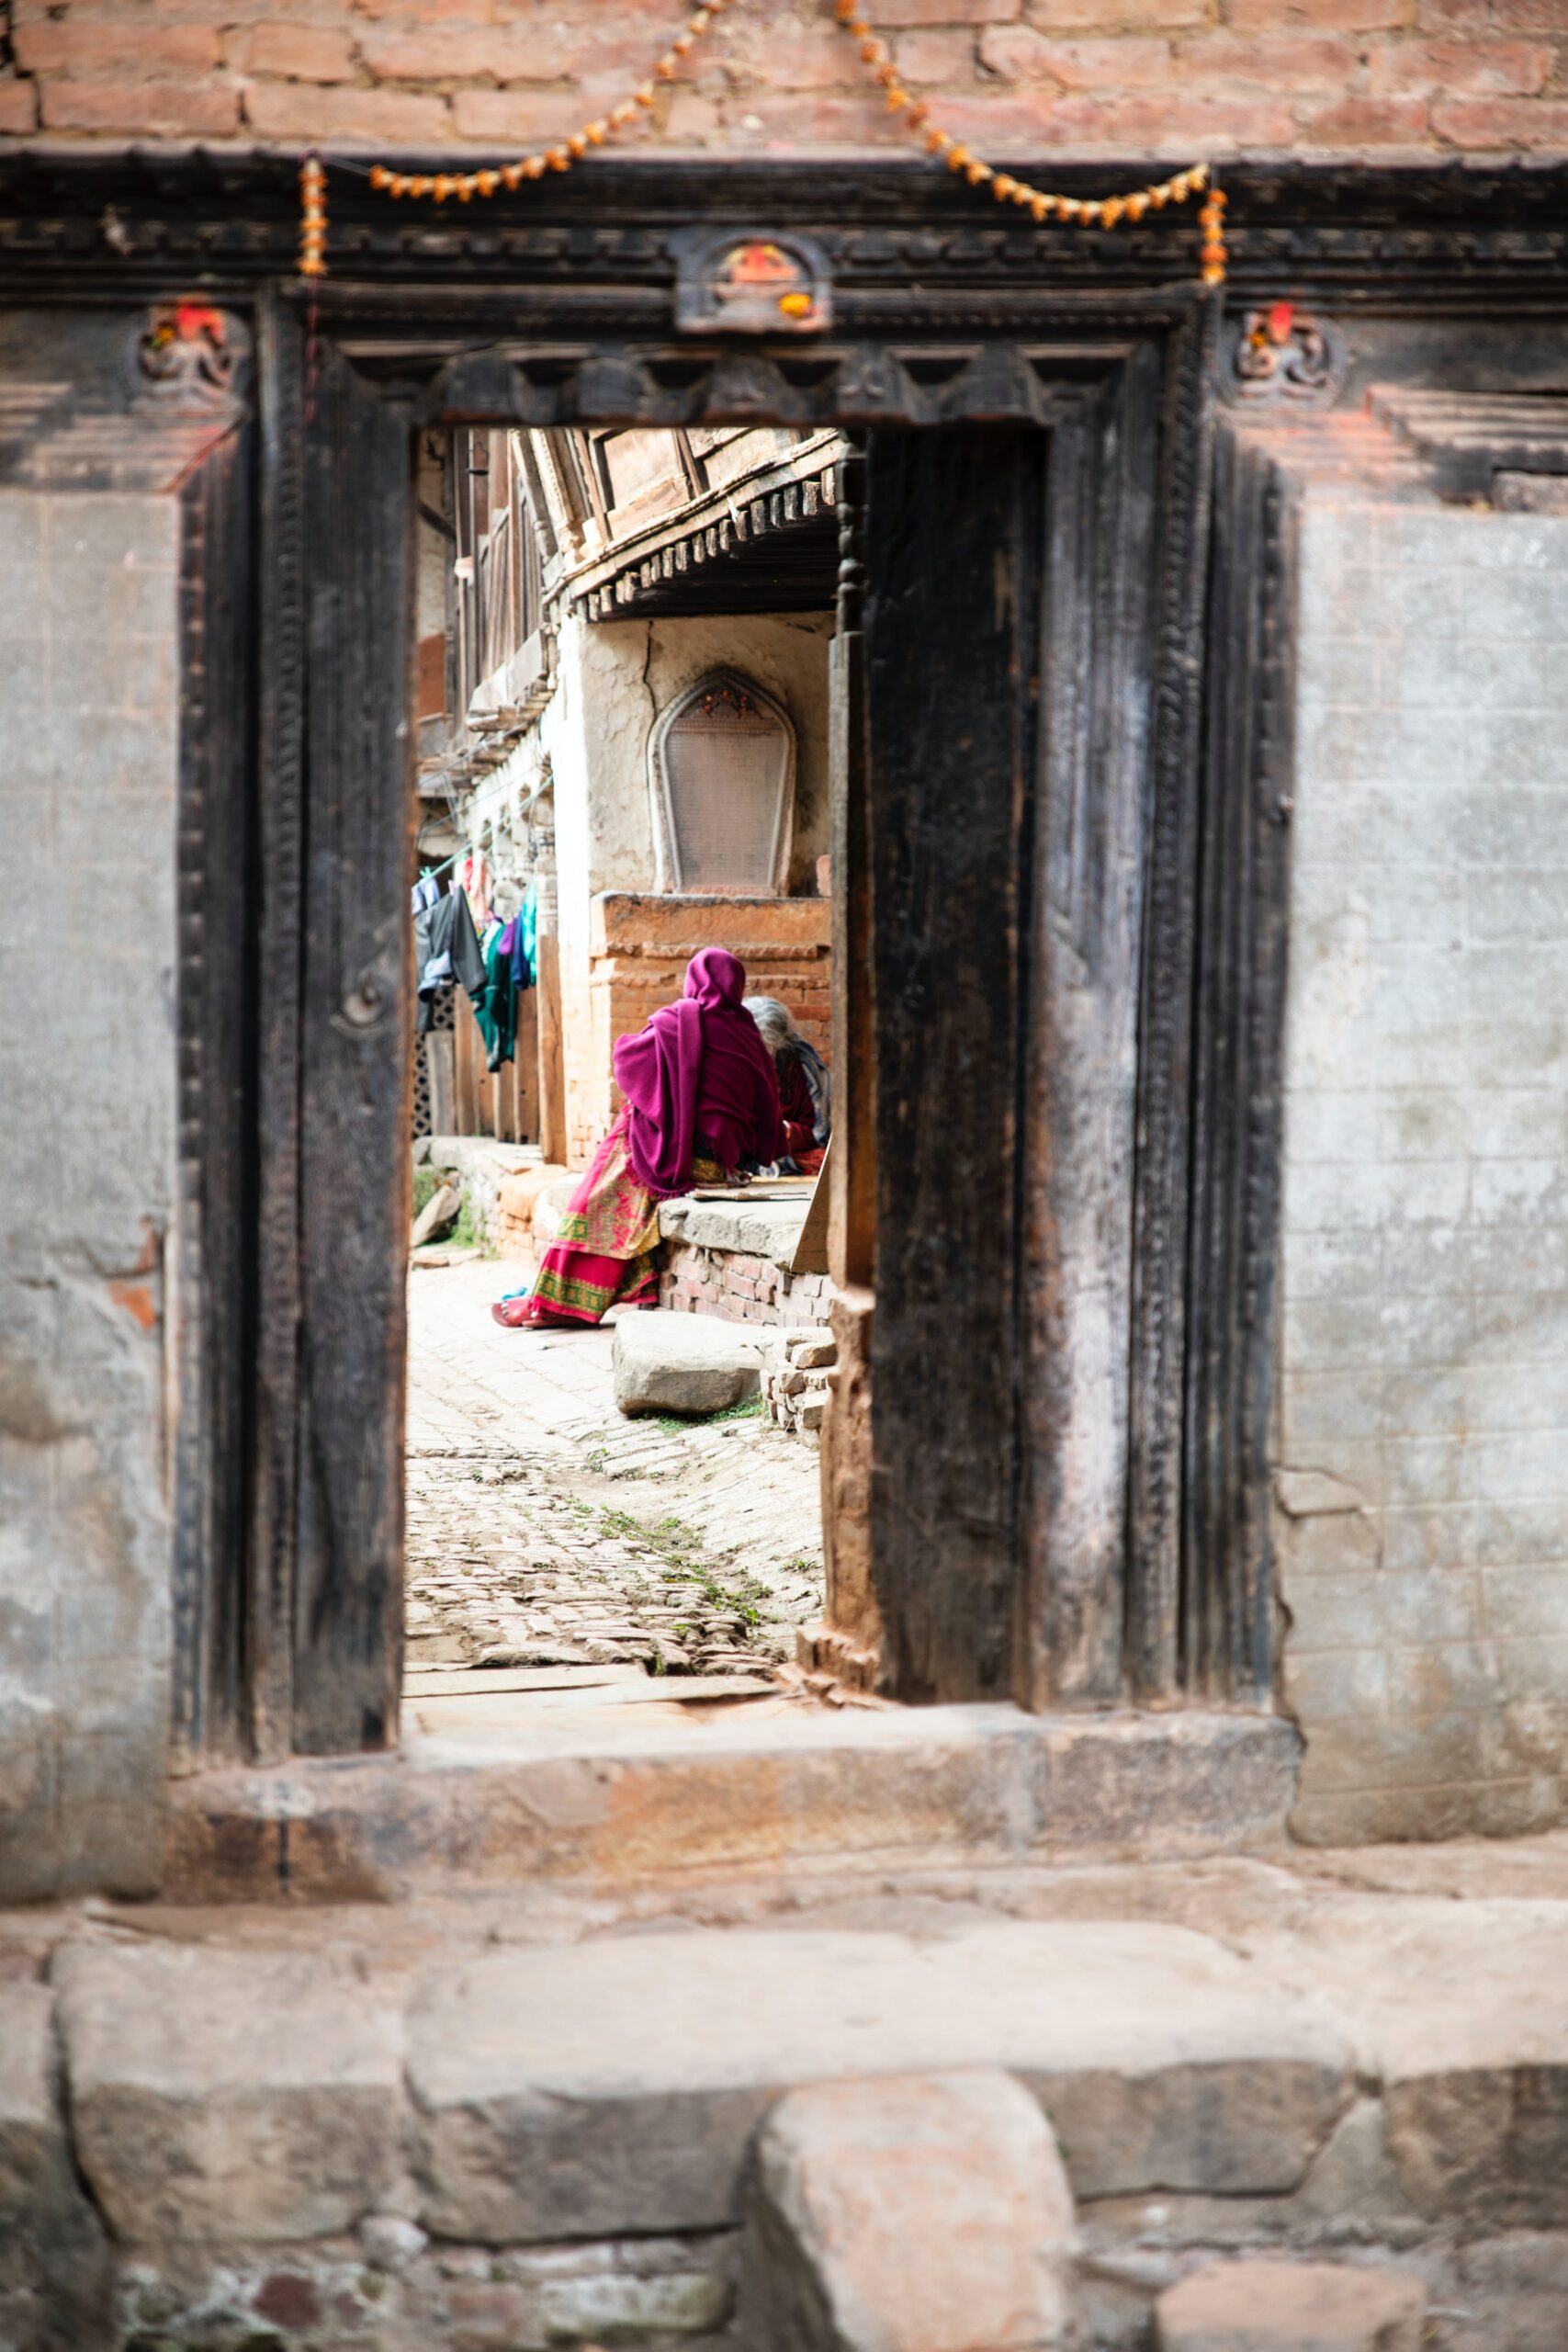 Two women sit conversing in the morning sun in Bhaktapur, Nepal.